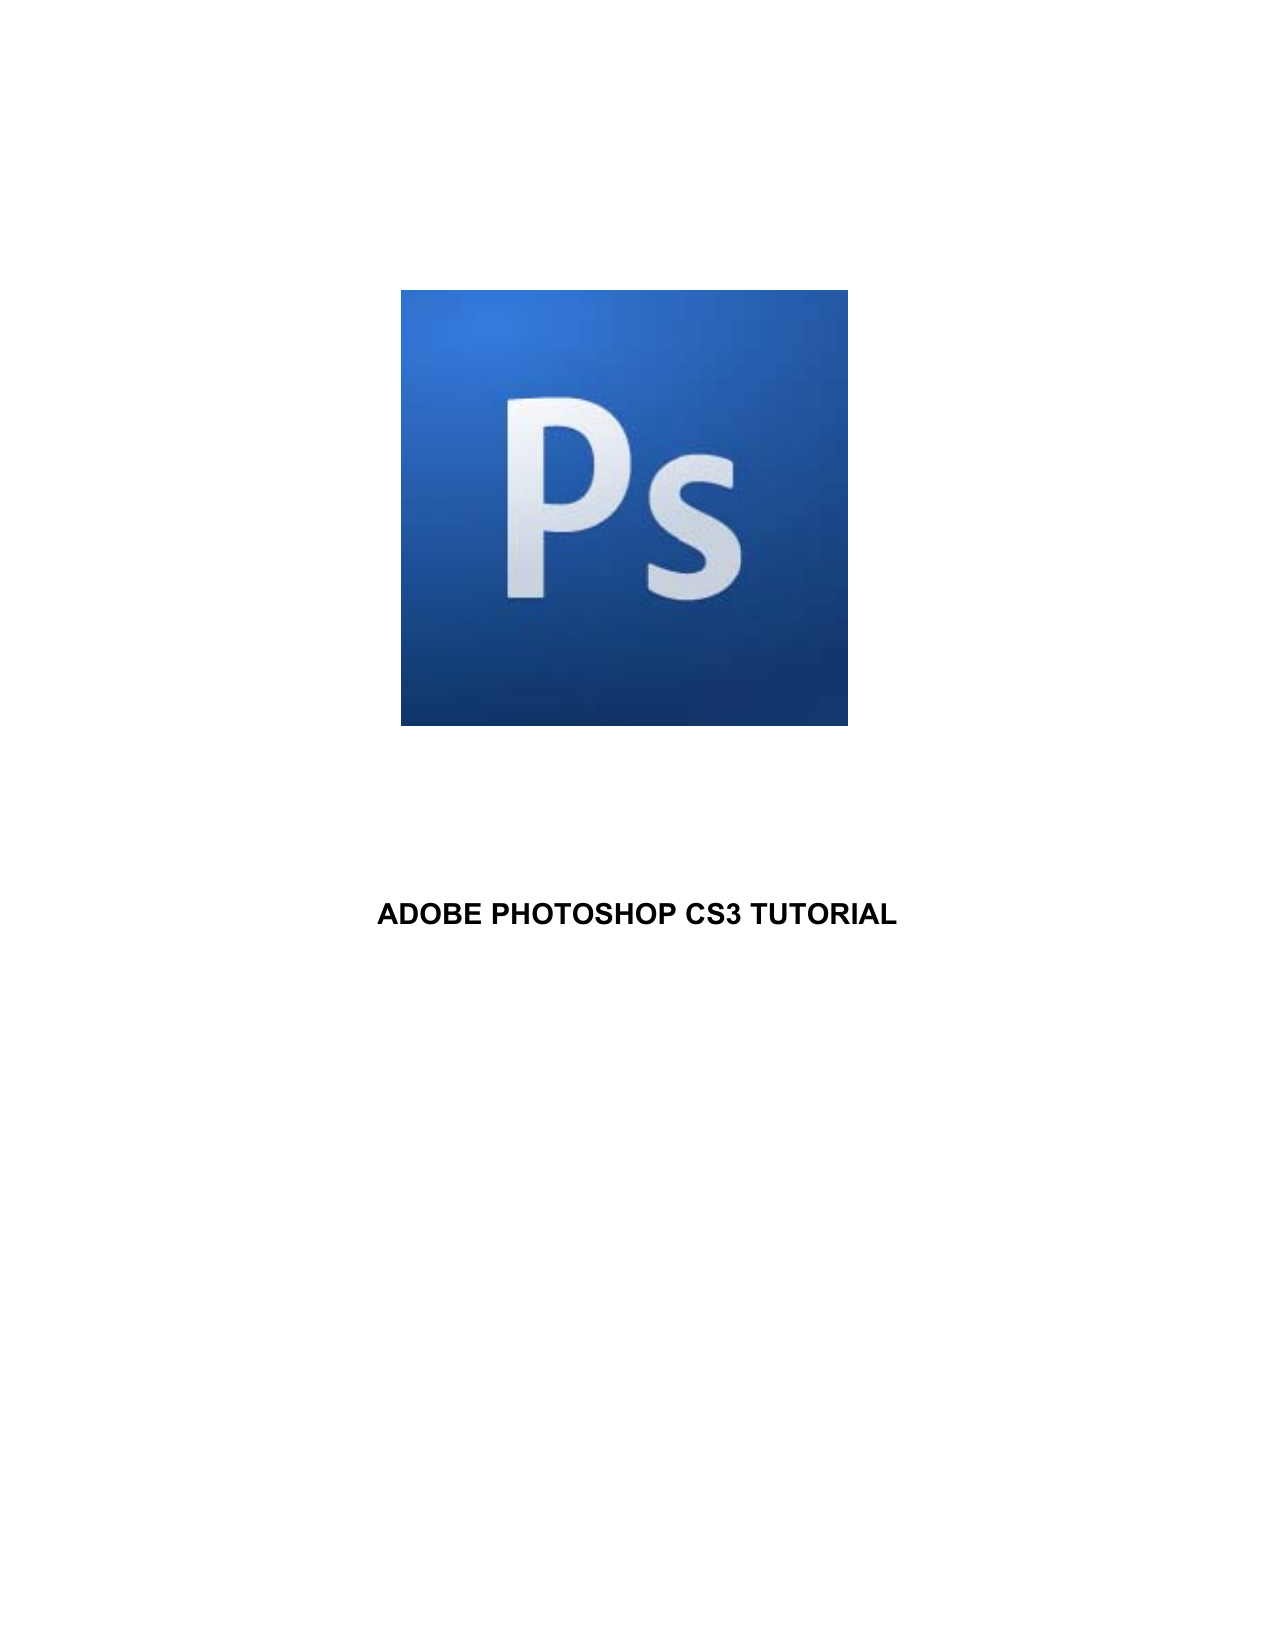 Adobe photoshop cs3 pdf download jetaudio free download for windows 10